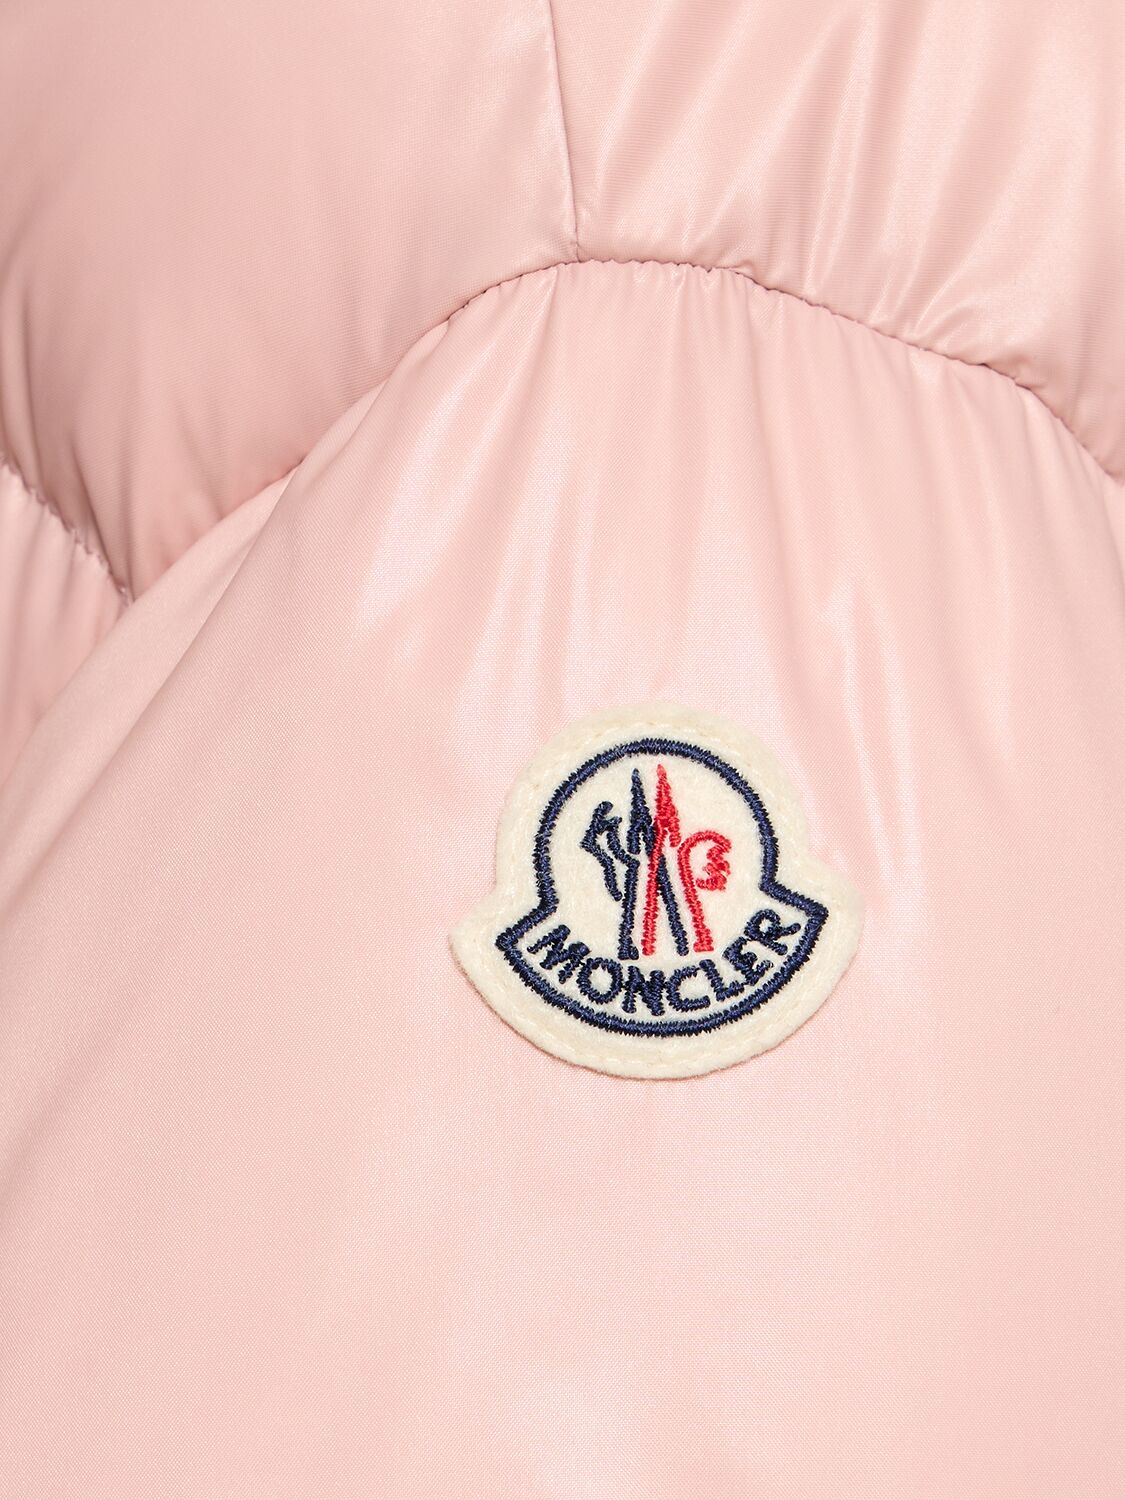 Shop Moncler Parana Nylon Down Jacket In Open Pink